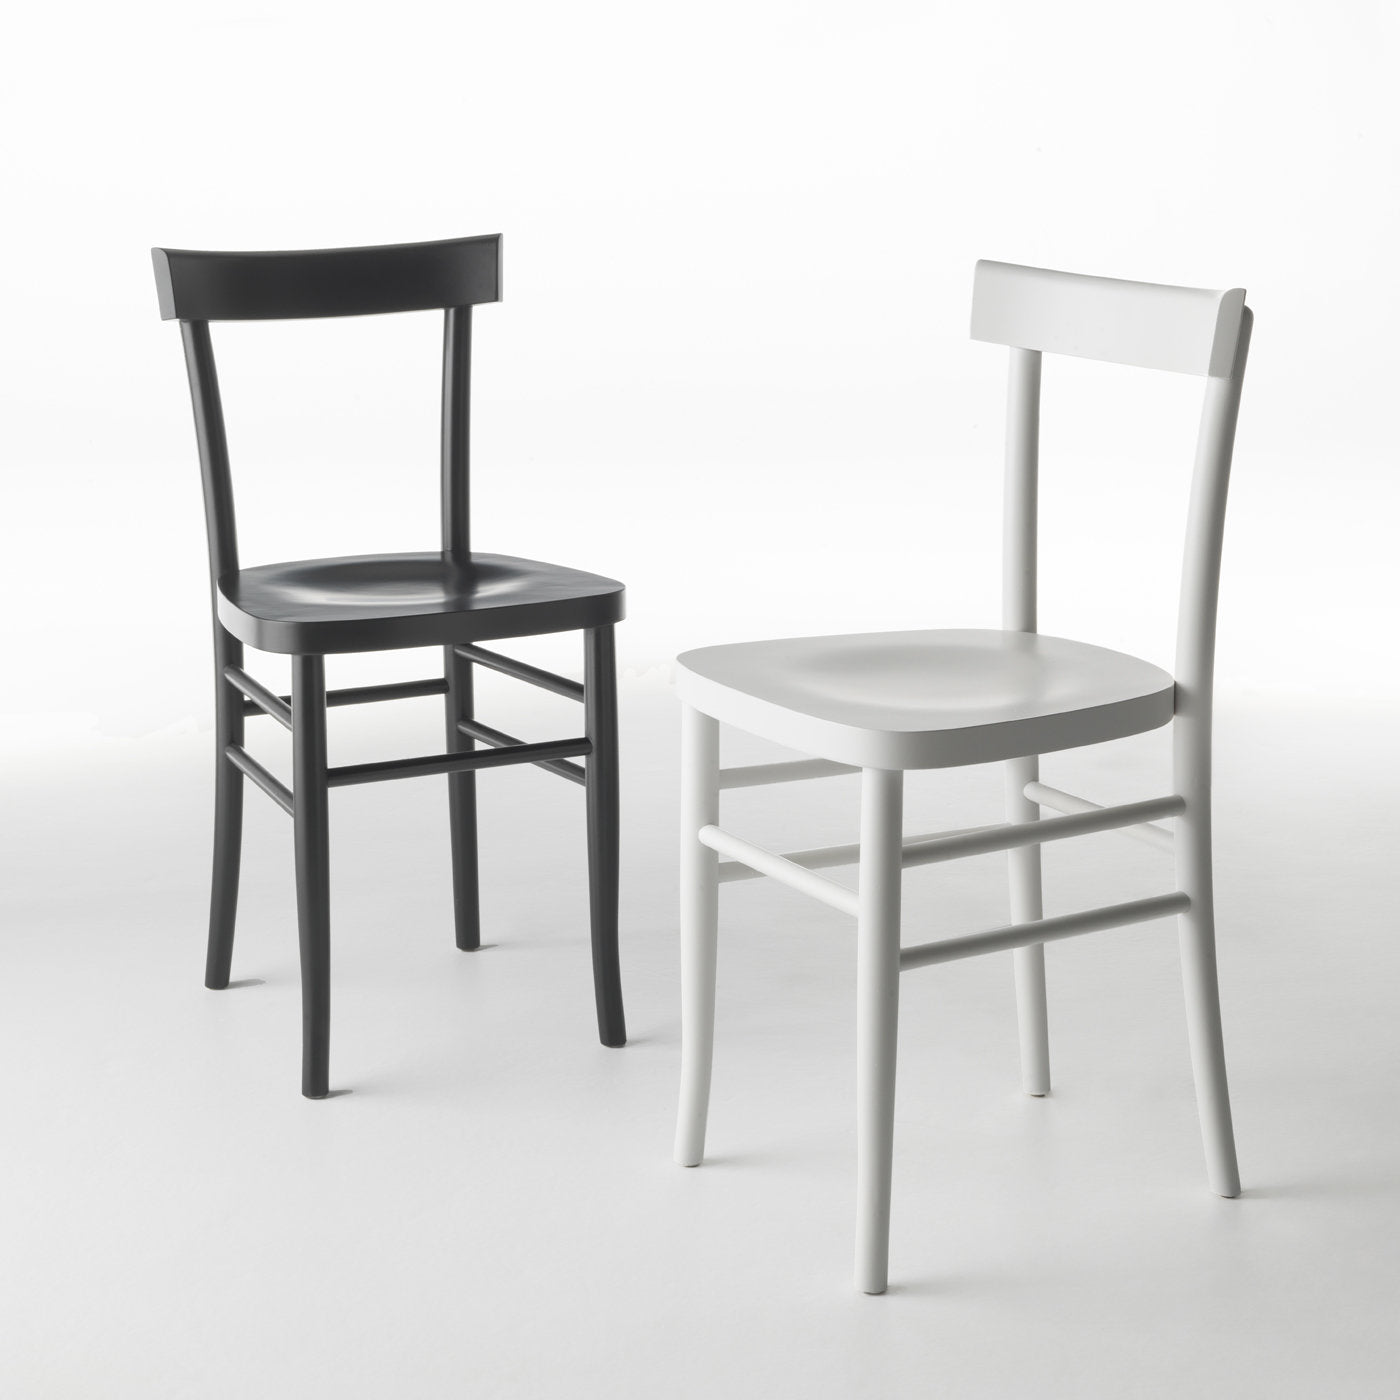 Set of 2 Cherish Black Chairs by StH - Alternative view 1